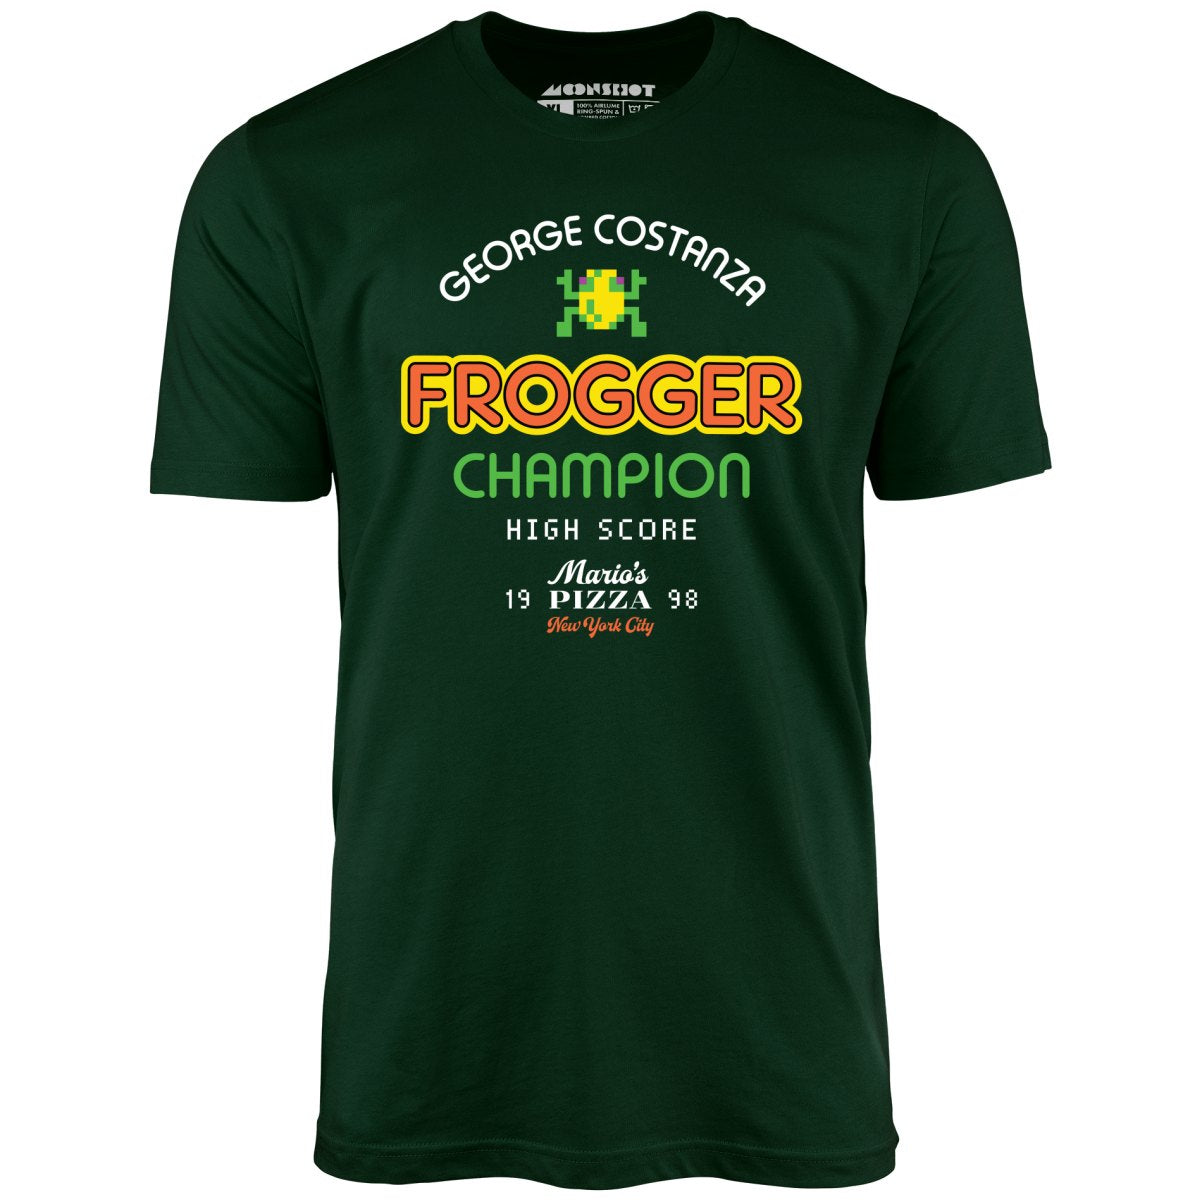 George Costanza Frogger Champion - Mario's Pizza - Unisex T-Shirt